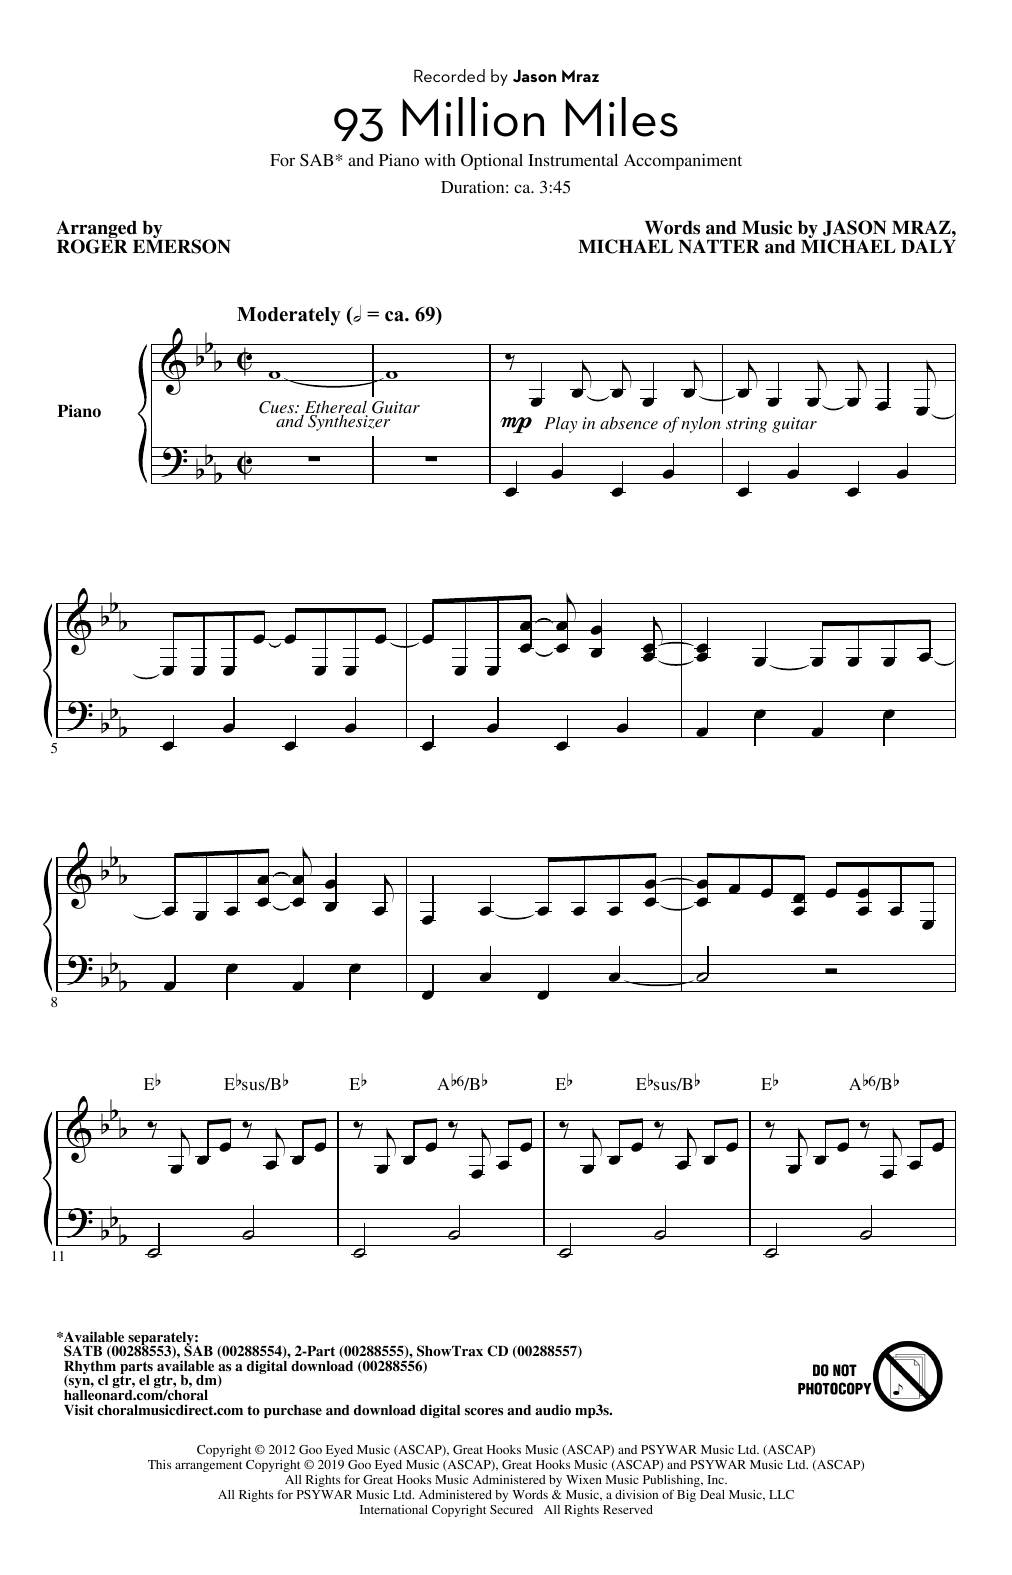 Jason Mraz 93 Million Miles (arr. Roger Emerson) Sheet Music Notes & Chords for SATB Choir - Download or Print PDF